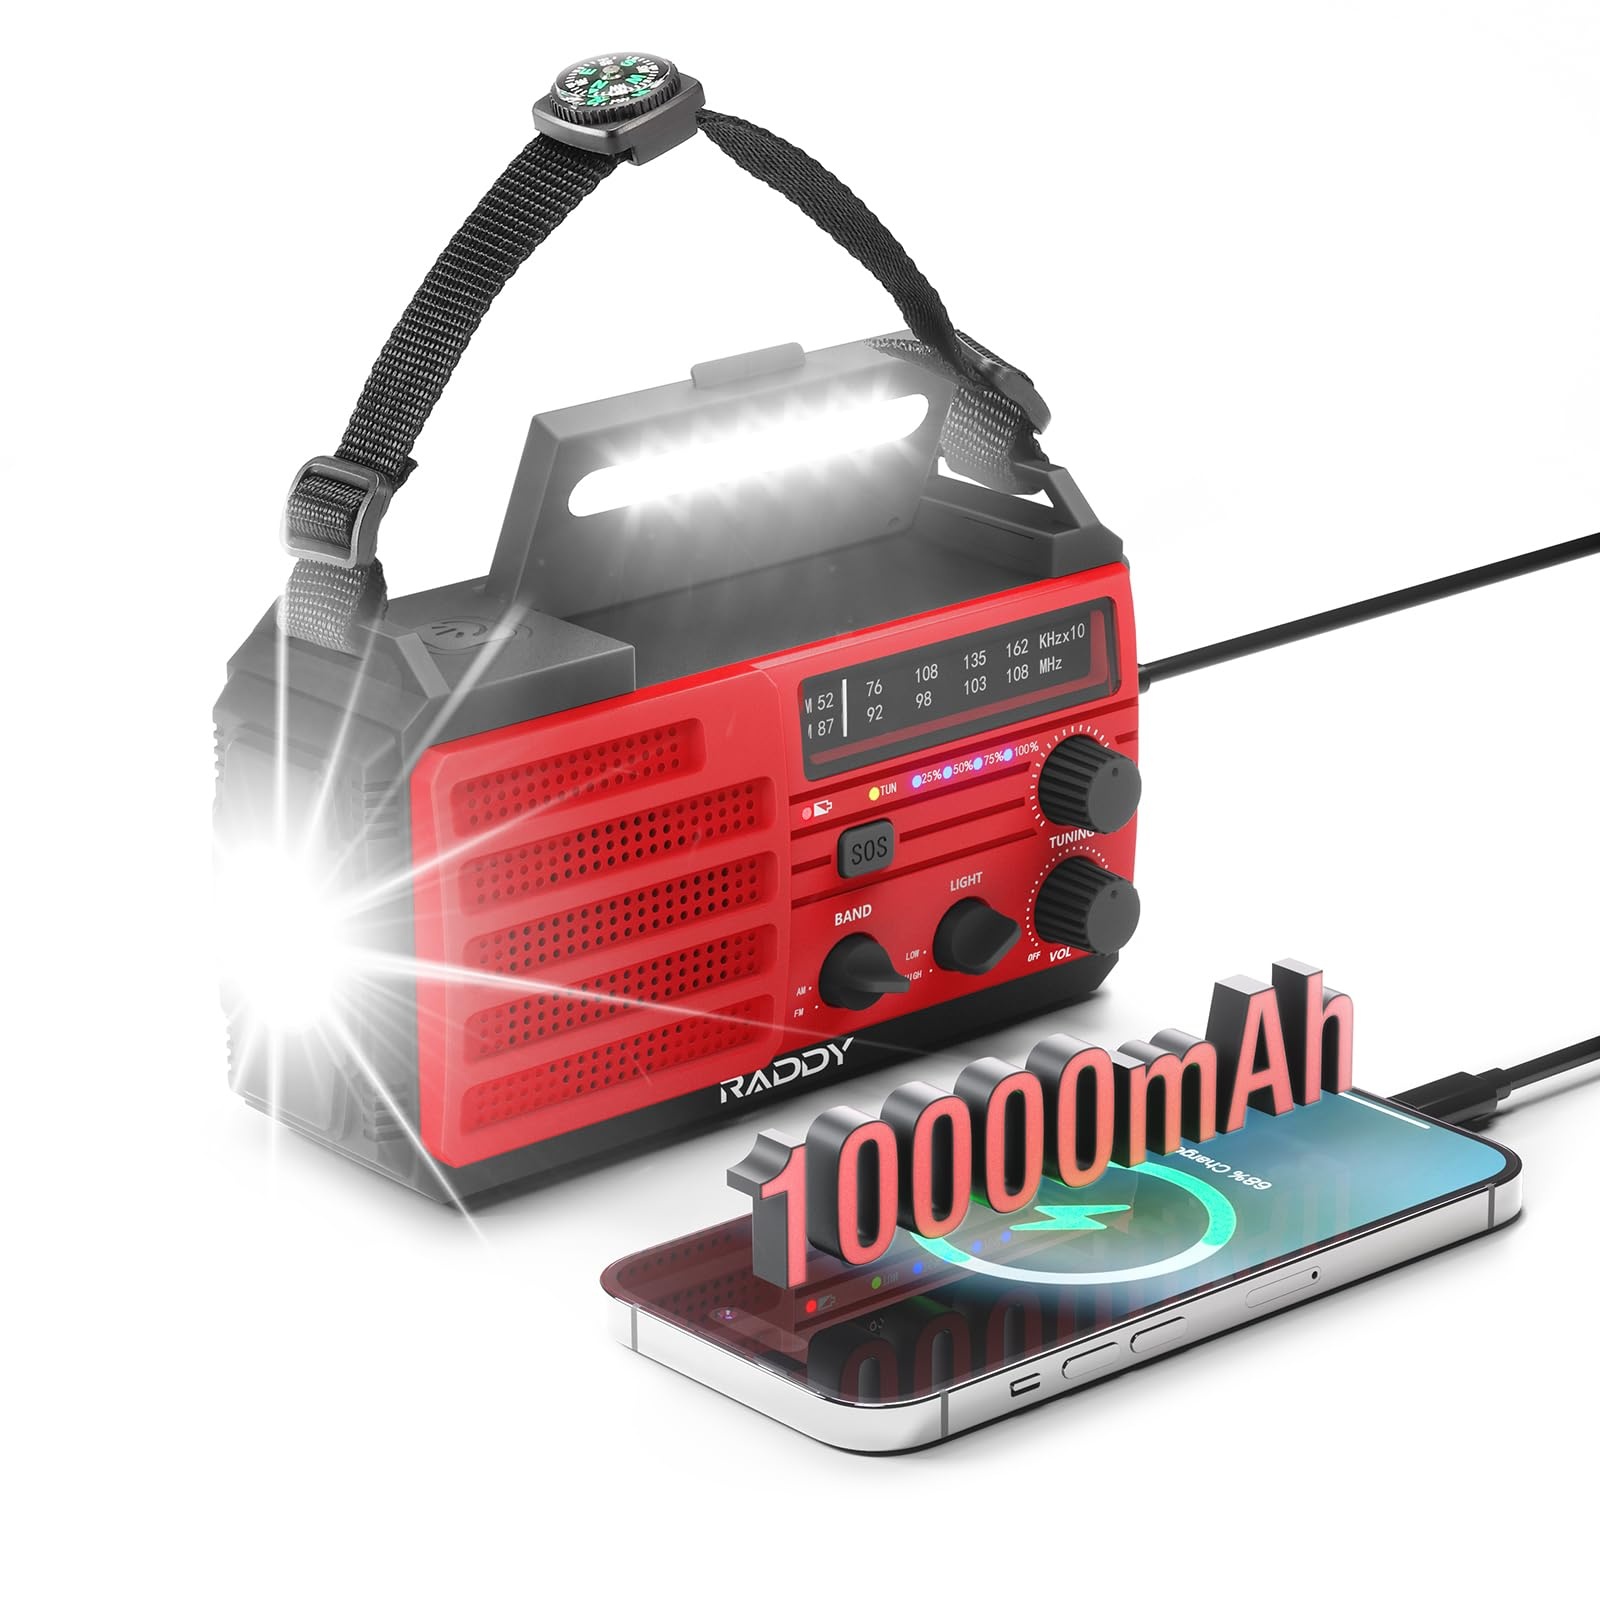 [10.000mAh] Raddy SW10 Kurbelradio Notfall, Tragbar Solar Radio mit AM/FM, Taschenlampe, Kompass, wiederaufladbarem Akku, SOS-Alarm für Stromausfall, Camping, Outdoor